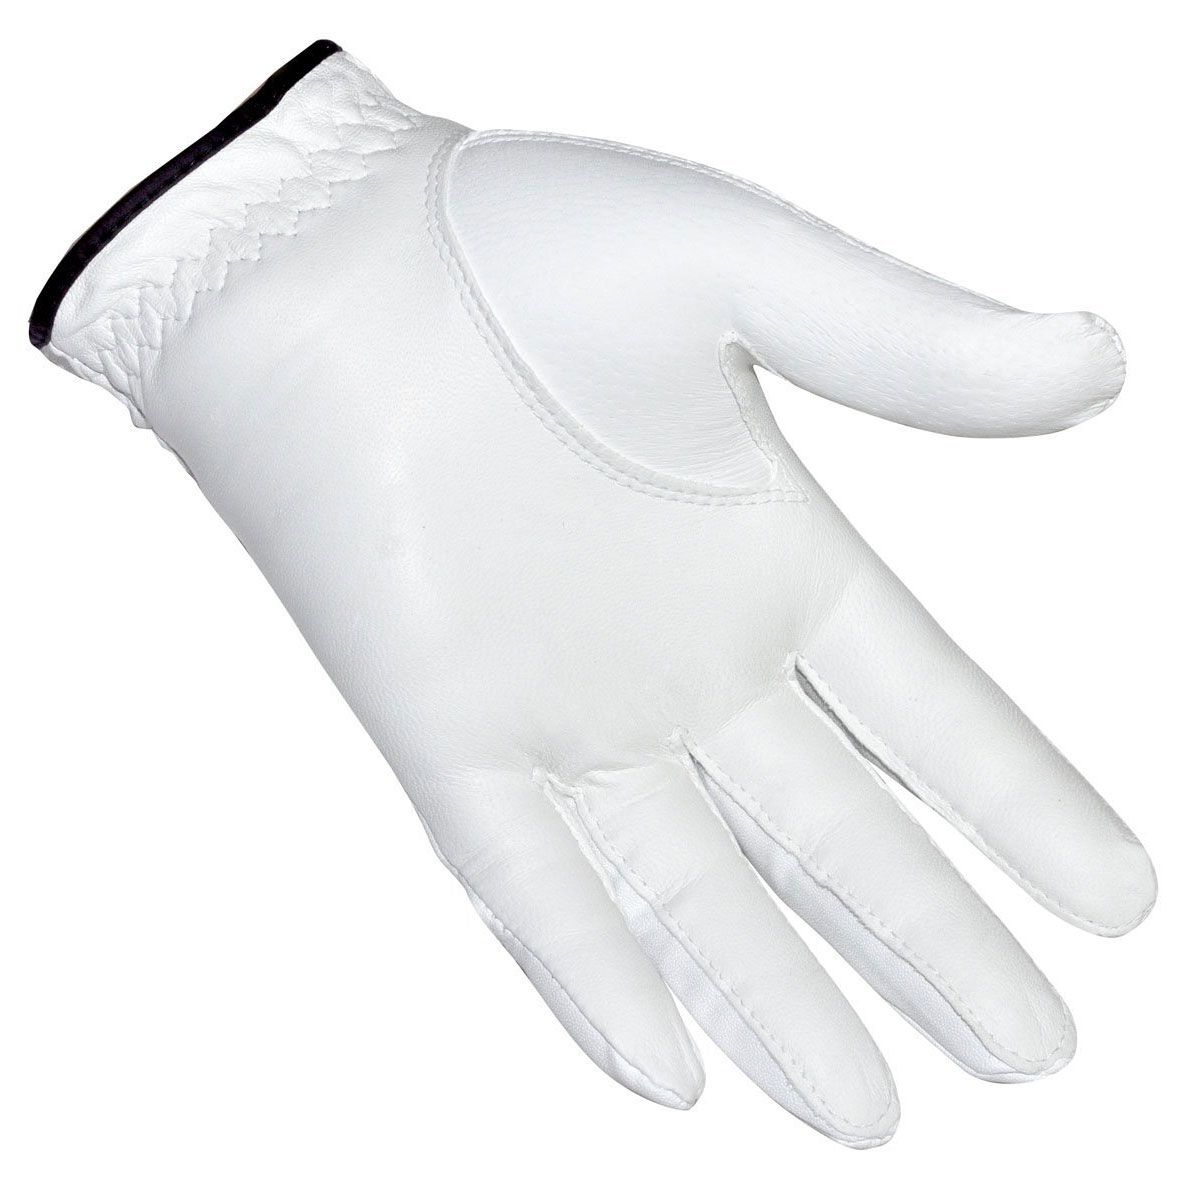 palm view of an Intech Men's Cabretta Leather Golf Glove